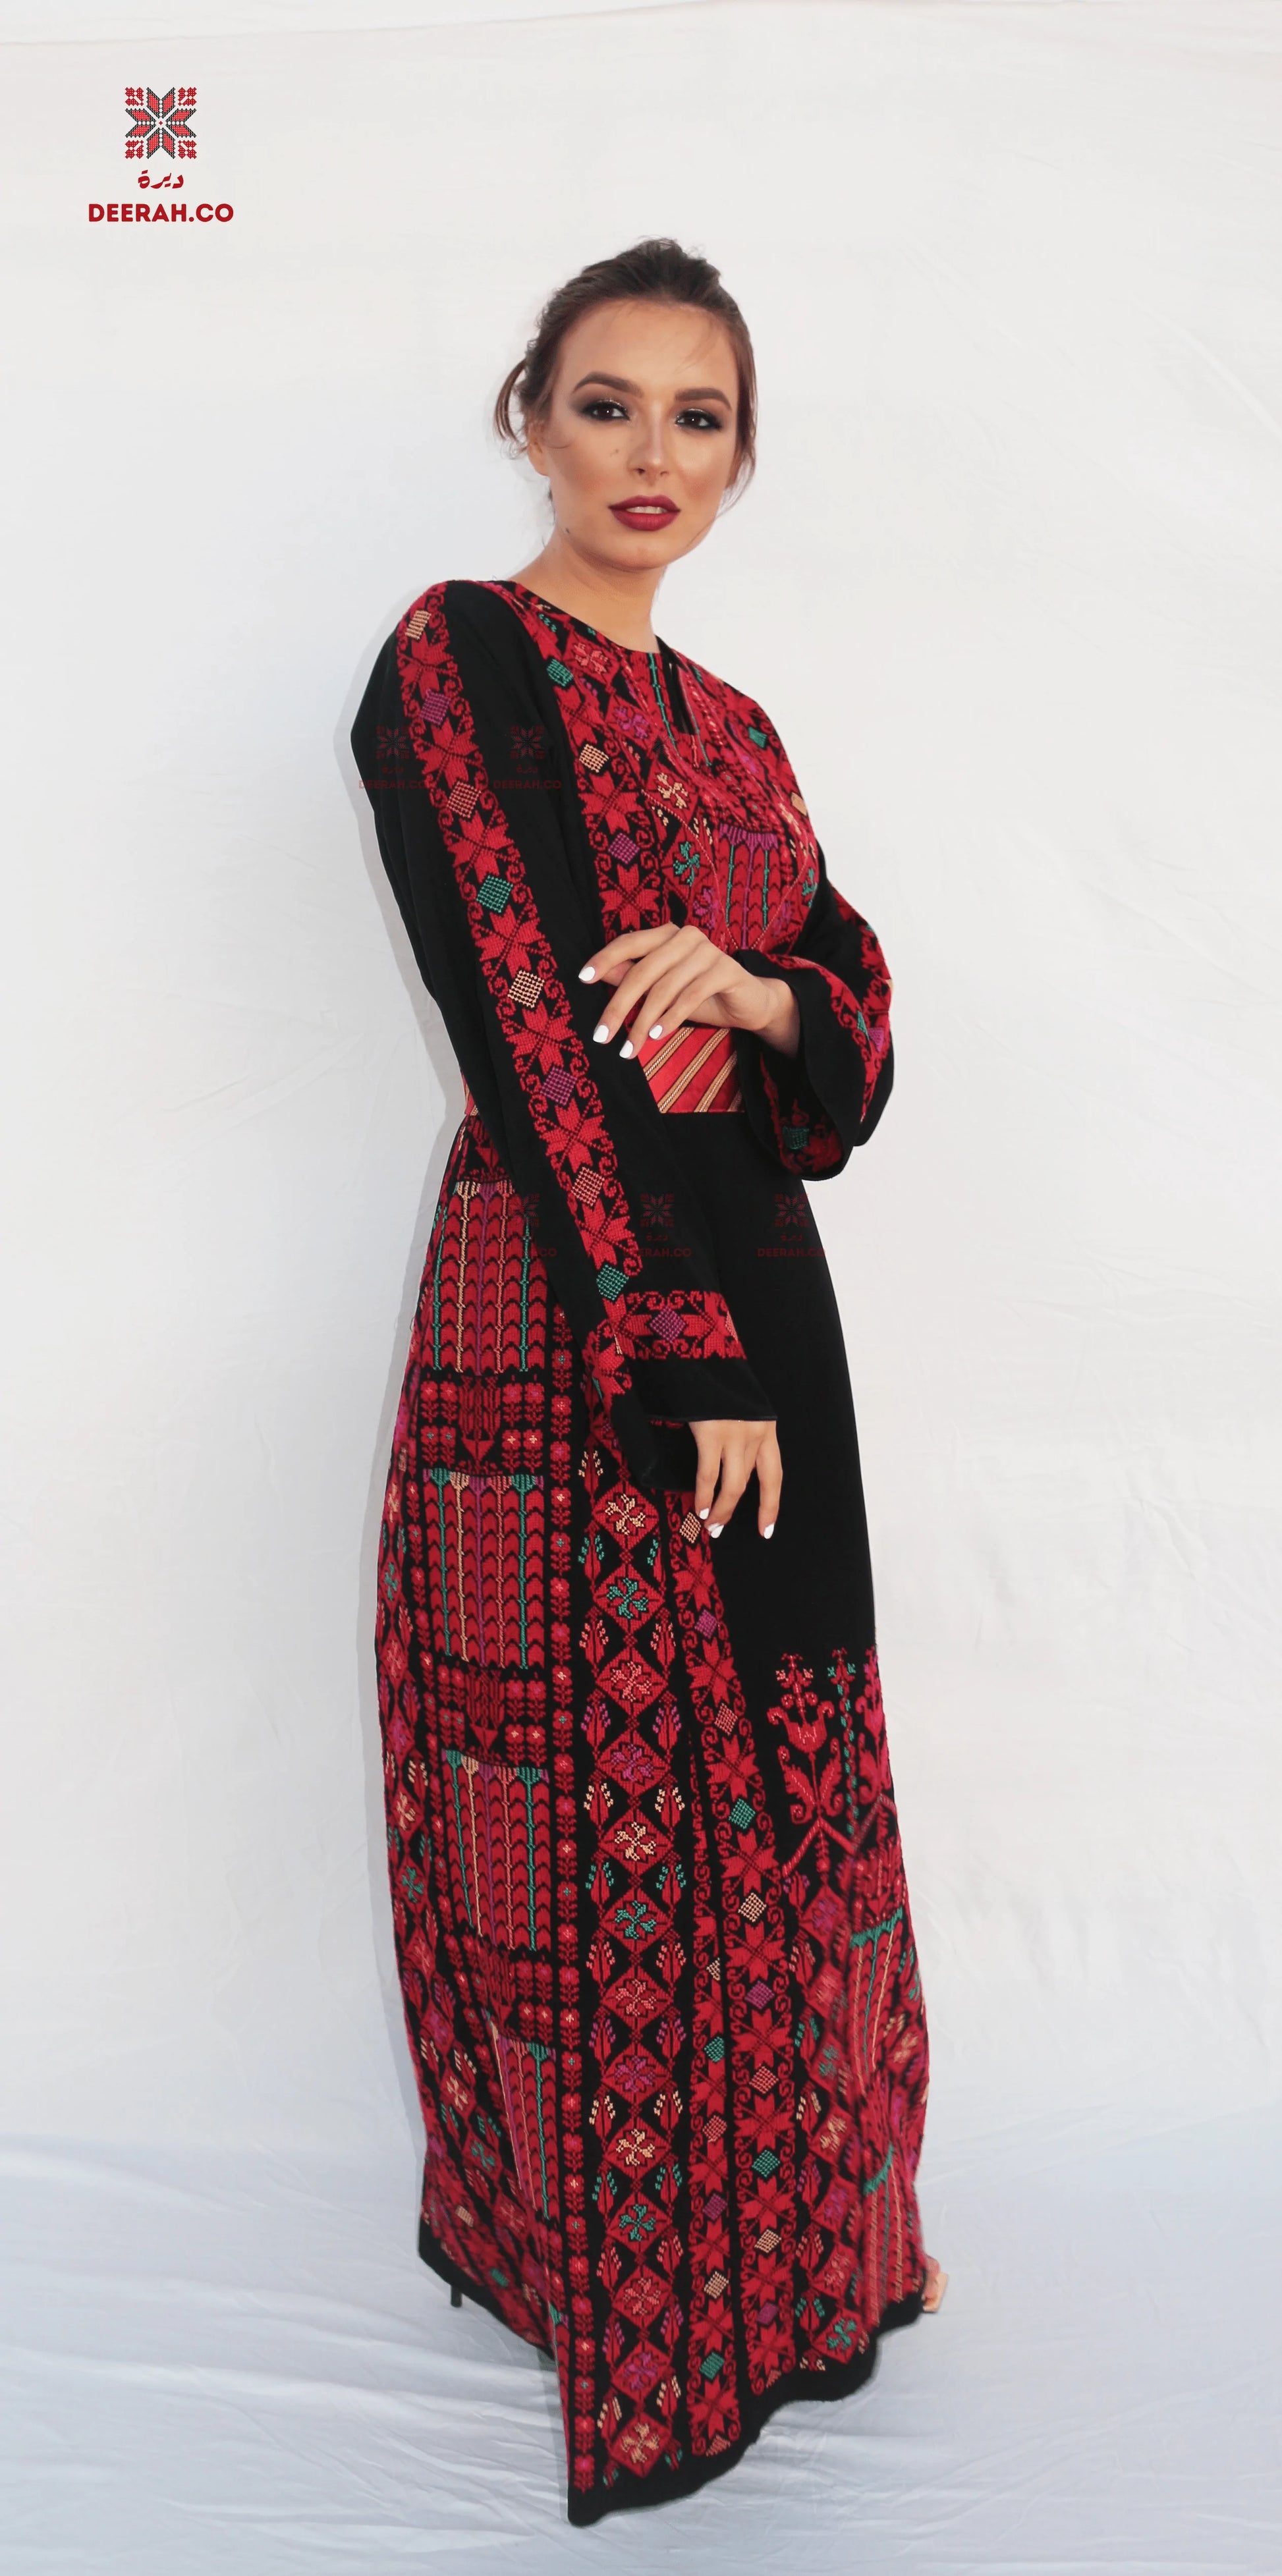 Farah - Hand Embroidered Traditional Dress Deerah